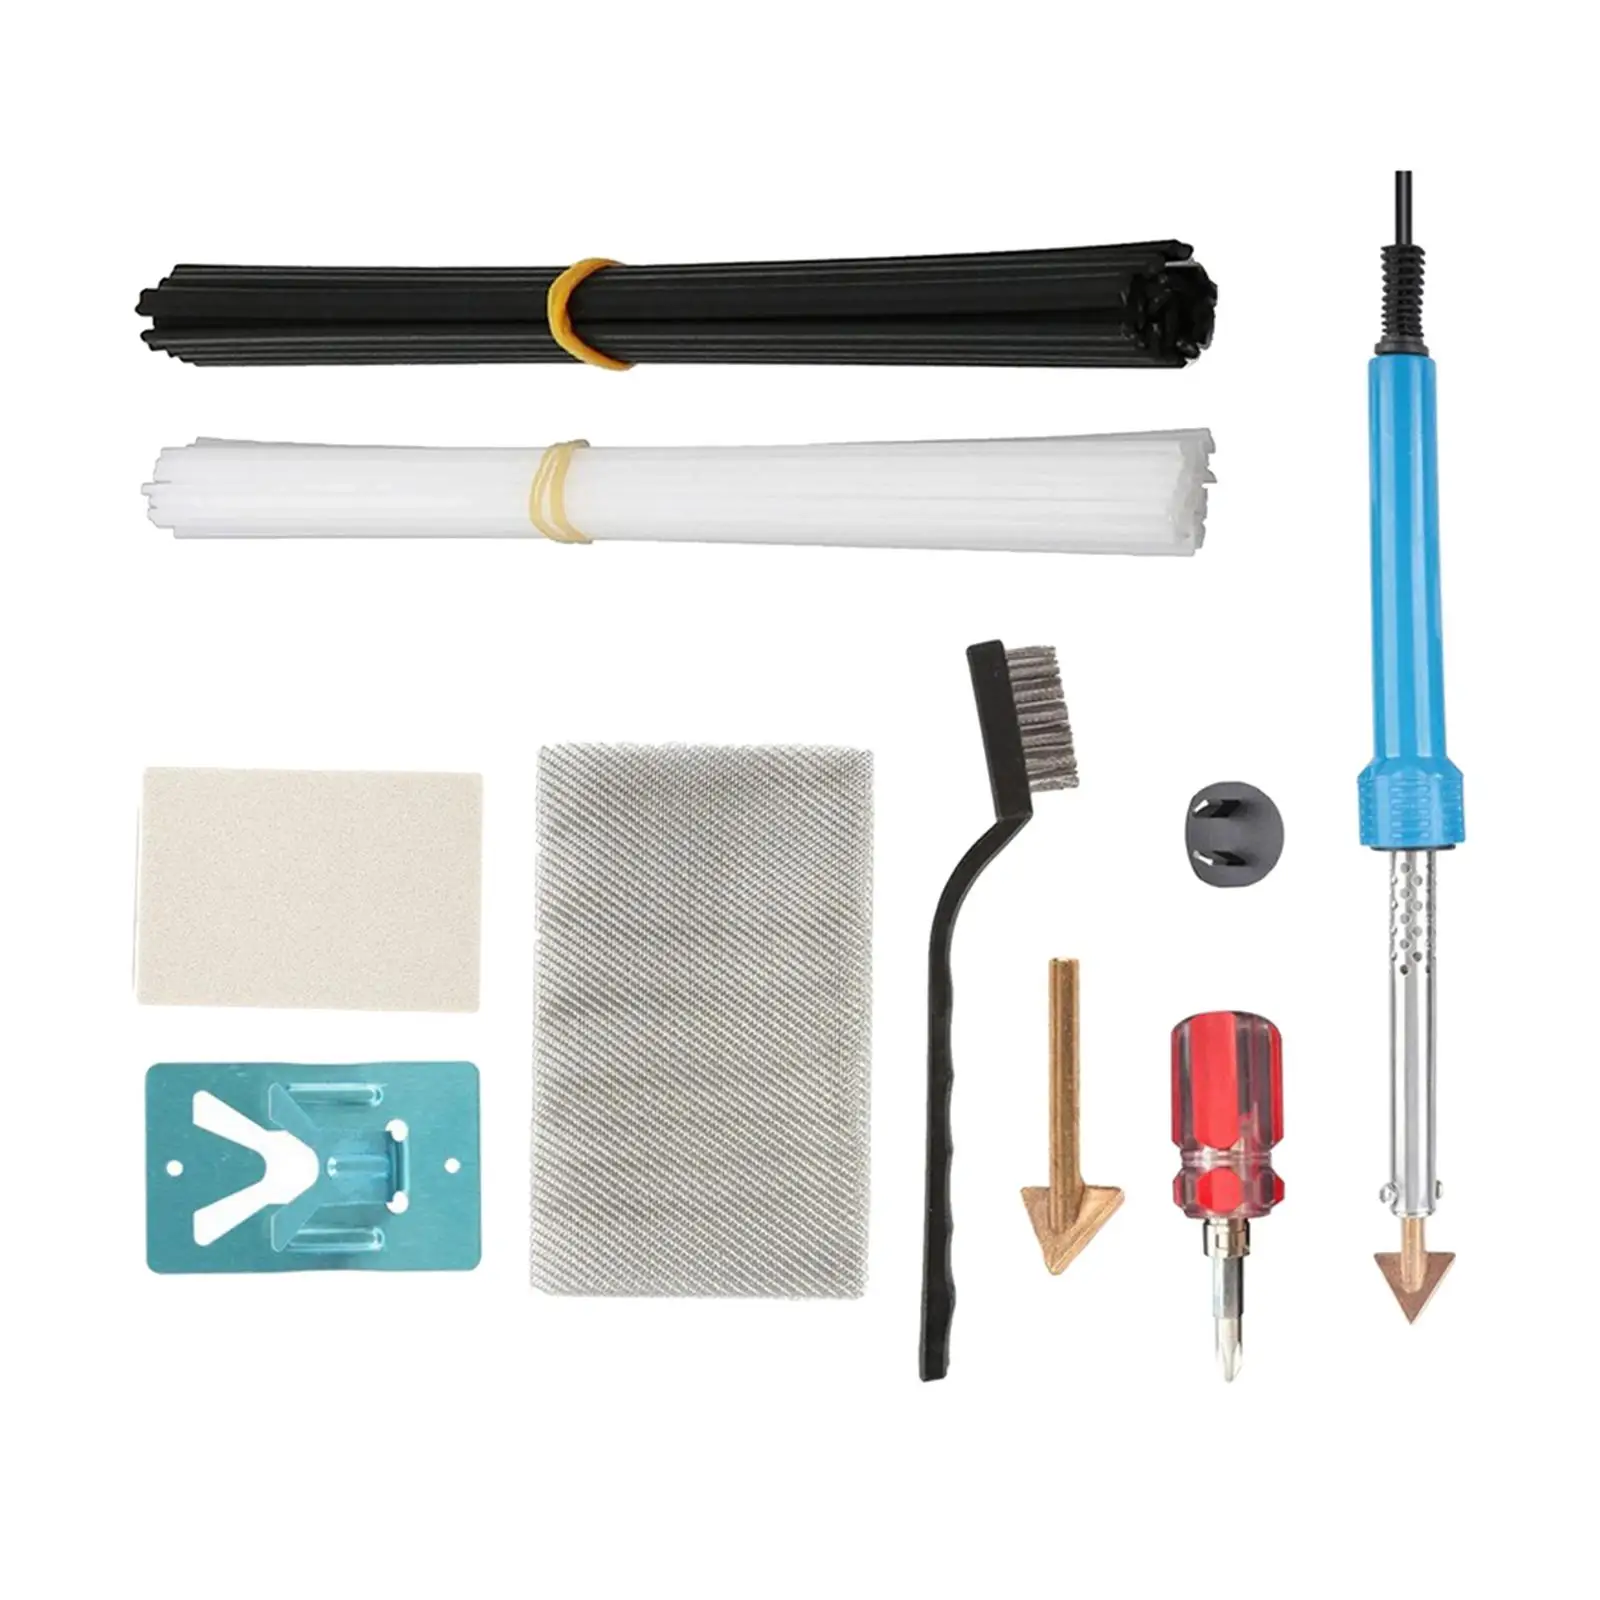 Plastic Welding Kit Surface Quick Heating Portable 2 Sandpaper 1 Metal Mesh Professional 80W Welder Tools for Kayak Arts